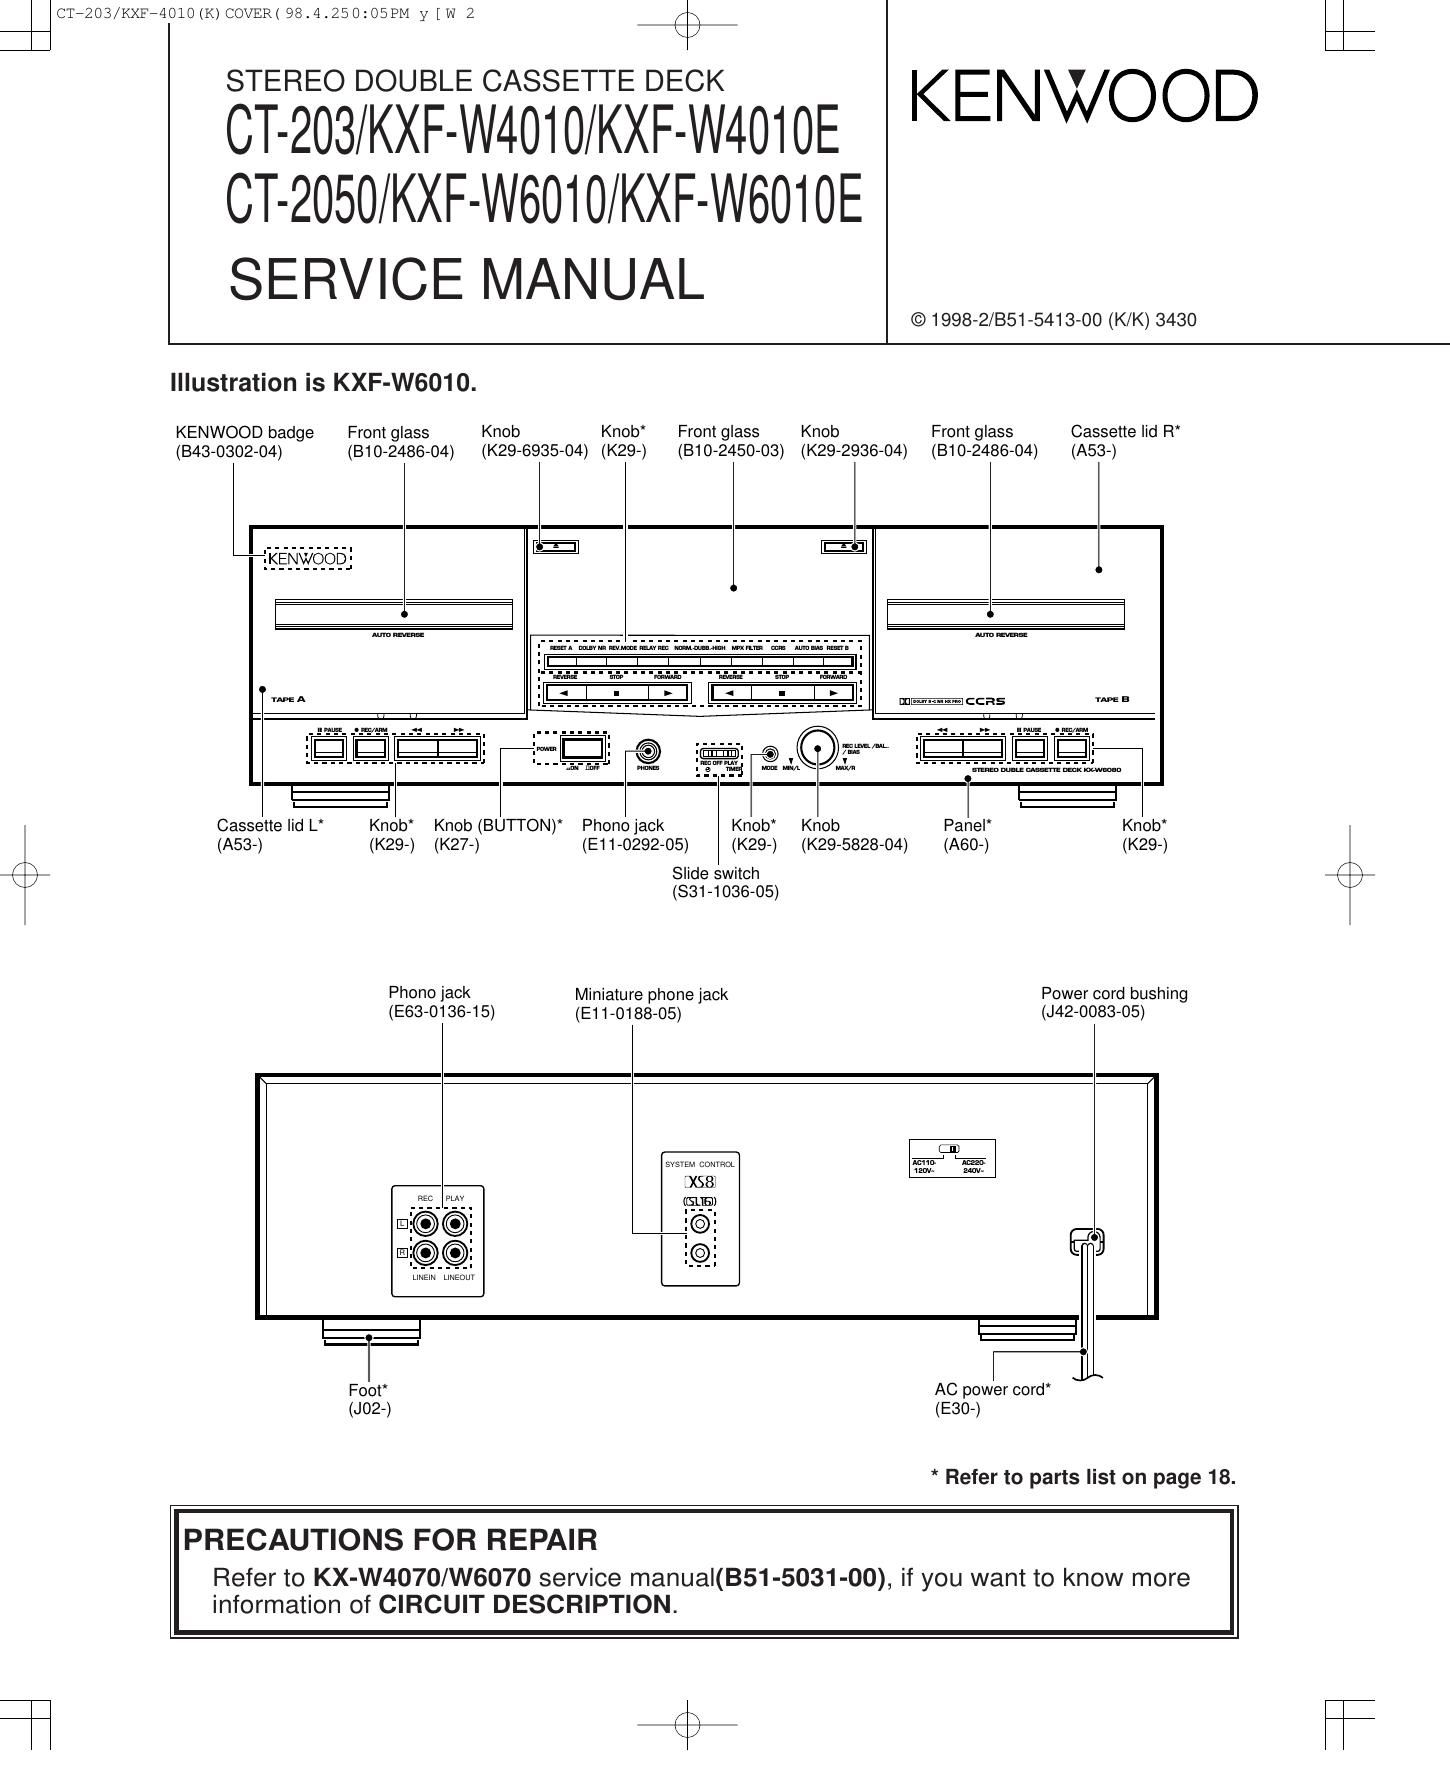 Kenwood CT 203 HU Service Manual